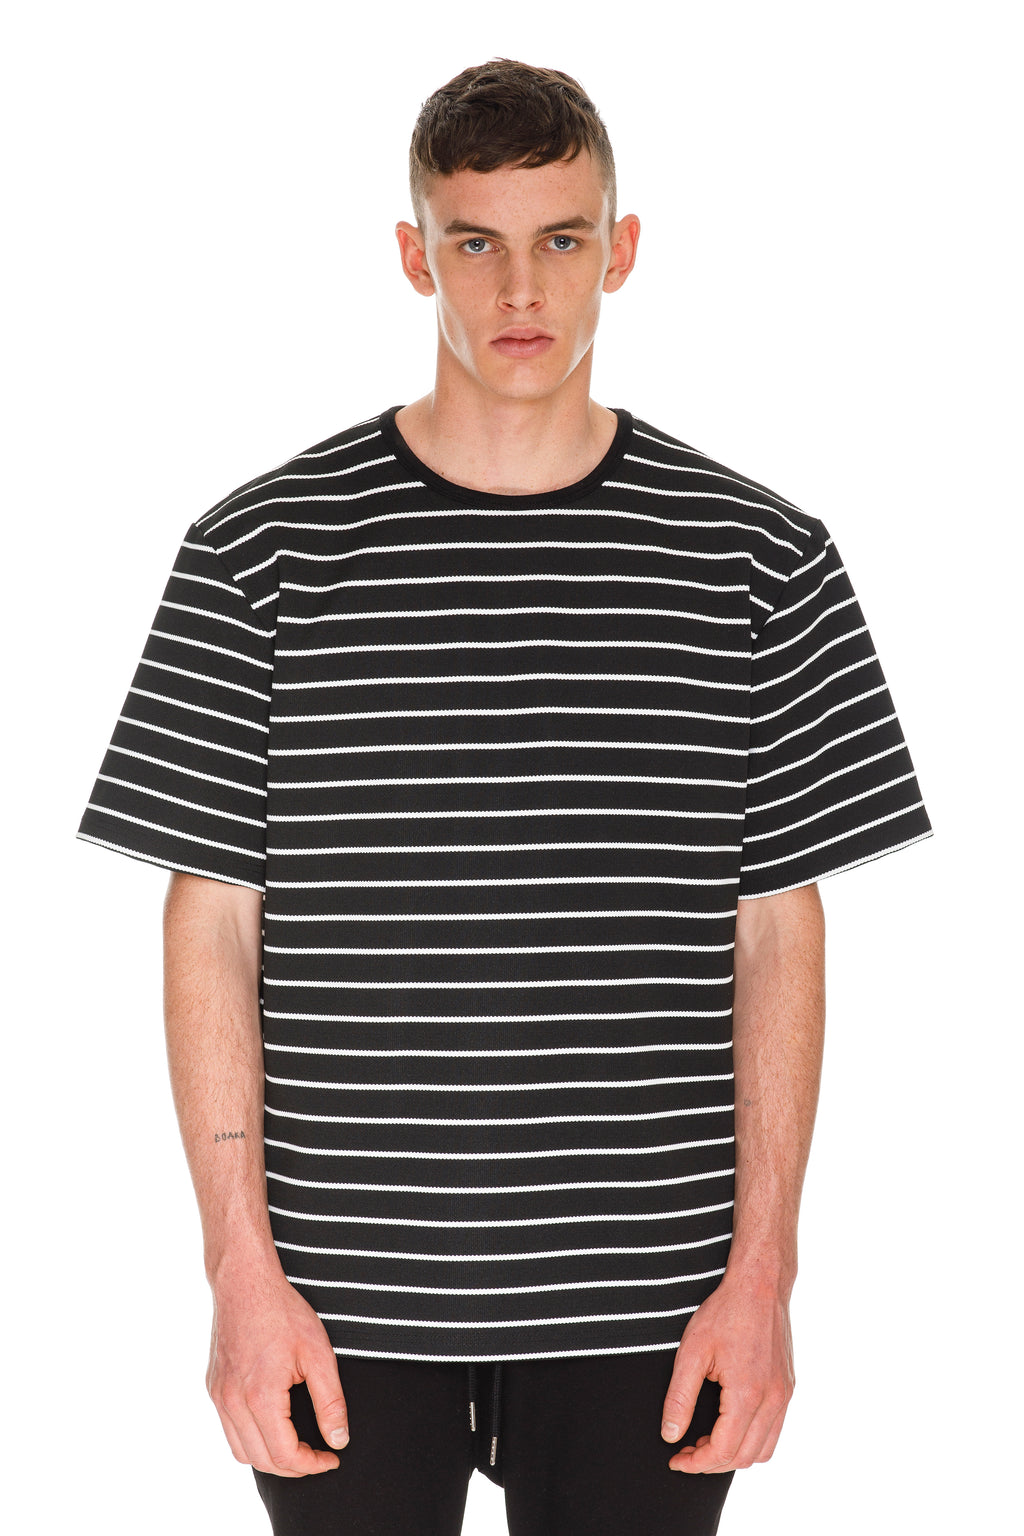 Oversized Stripe T-Shirt - Black & White Front Look